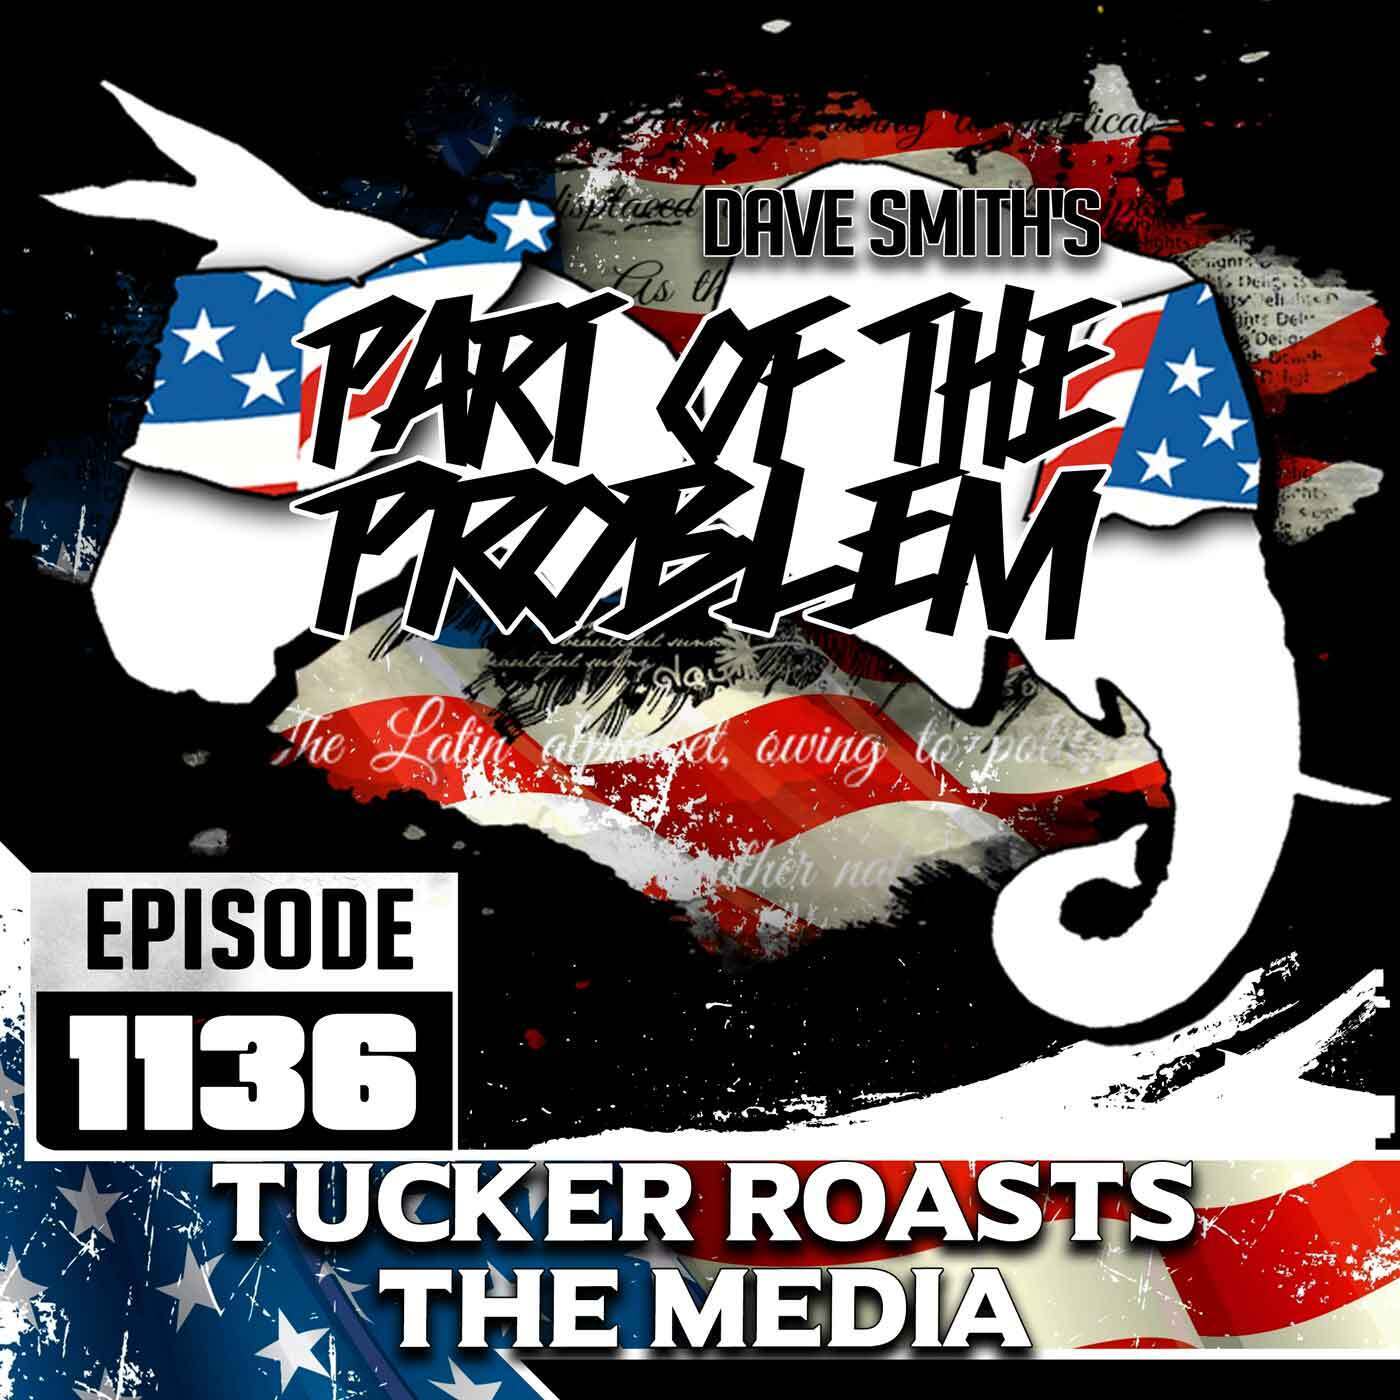 Tucker Roasts The Media